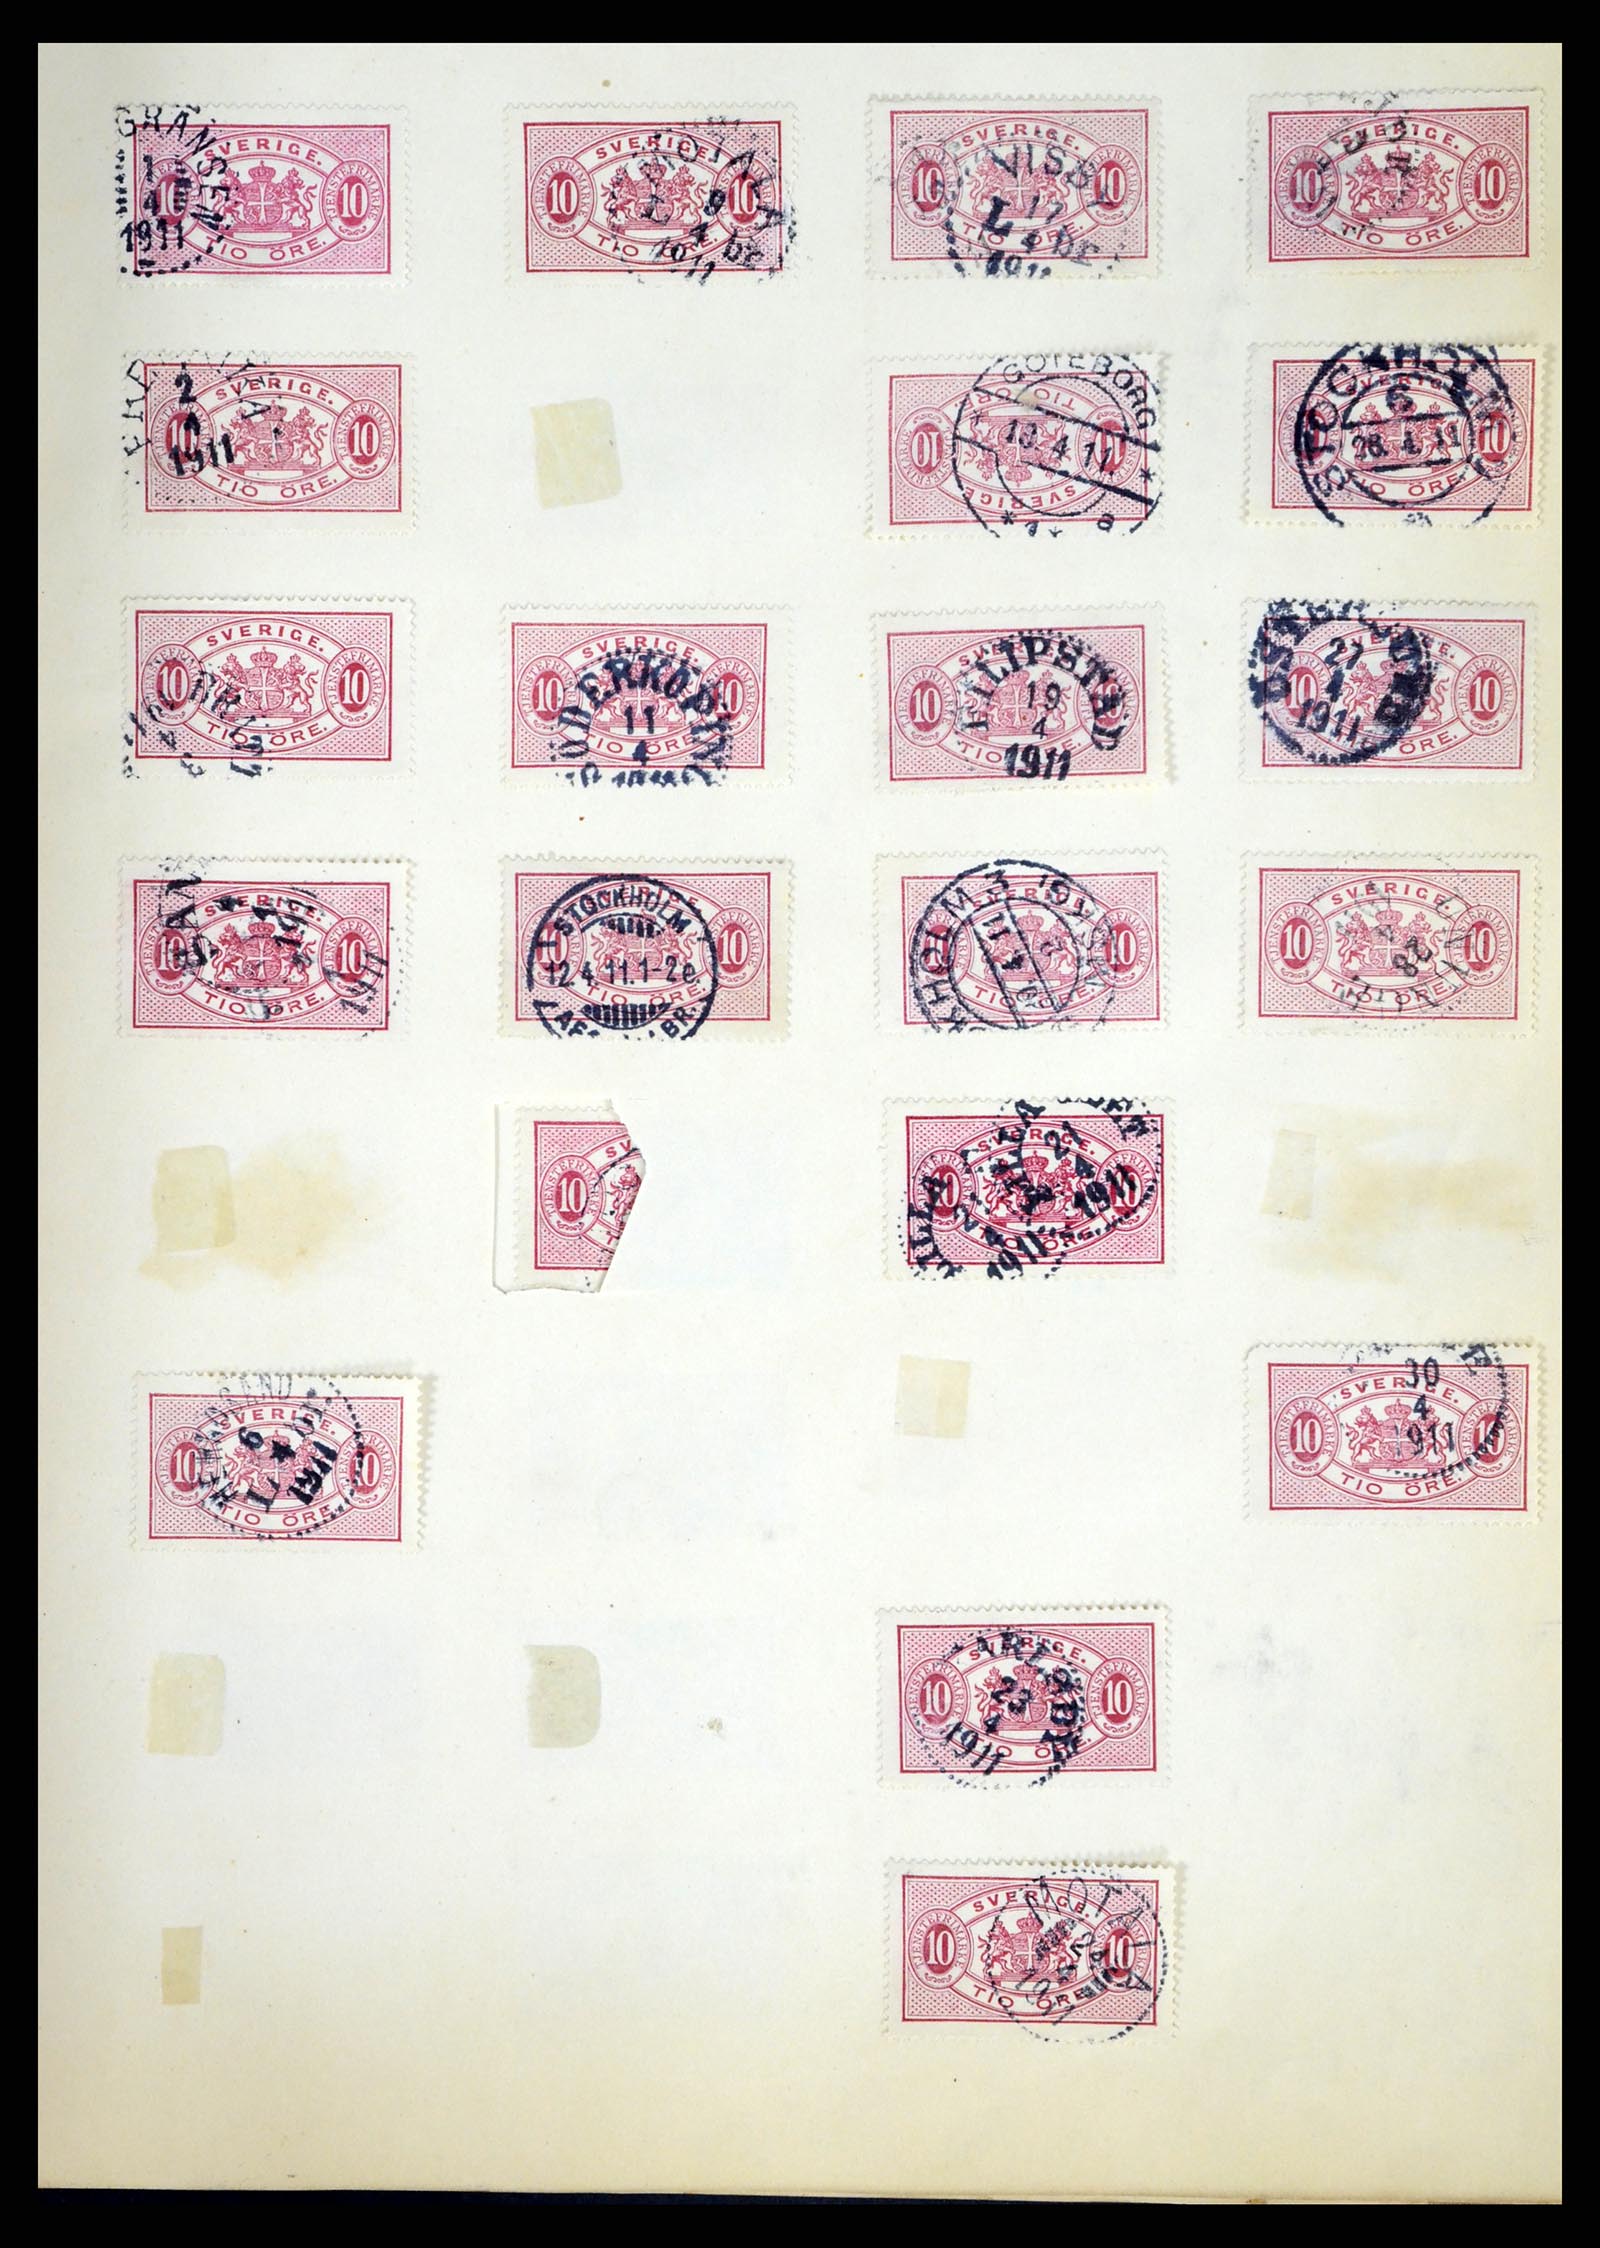 37916 257 - Stamp Collection 37916 Sweden cancels 1874-1896.